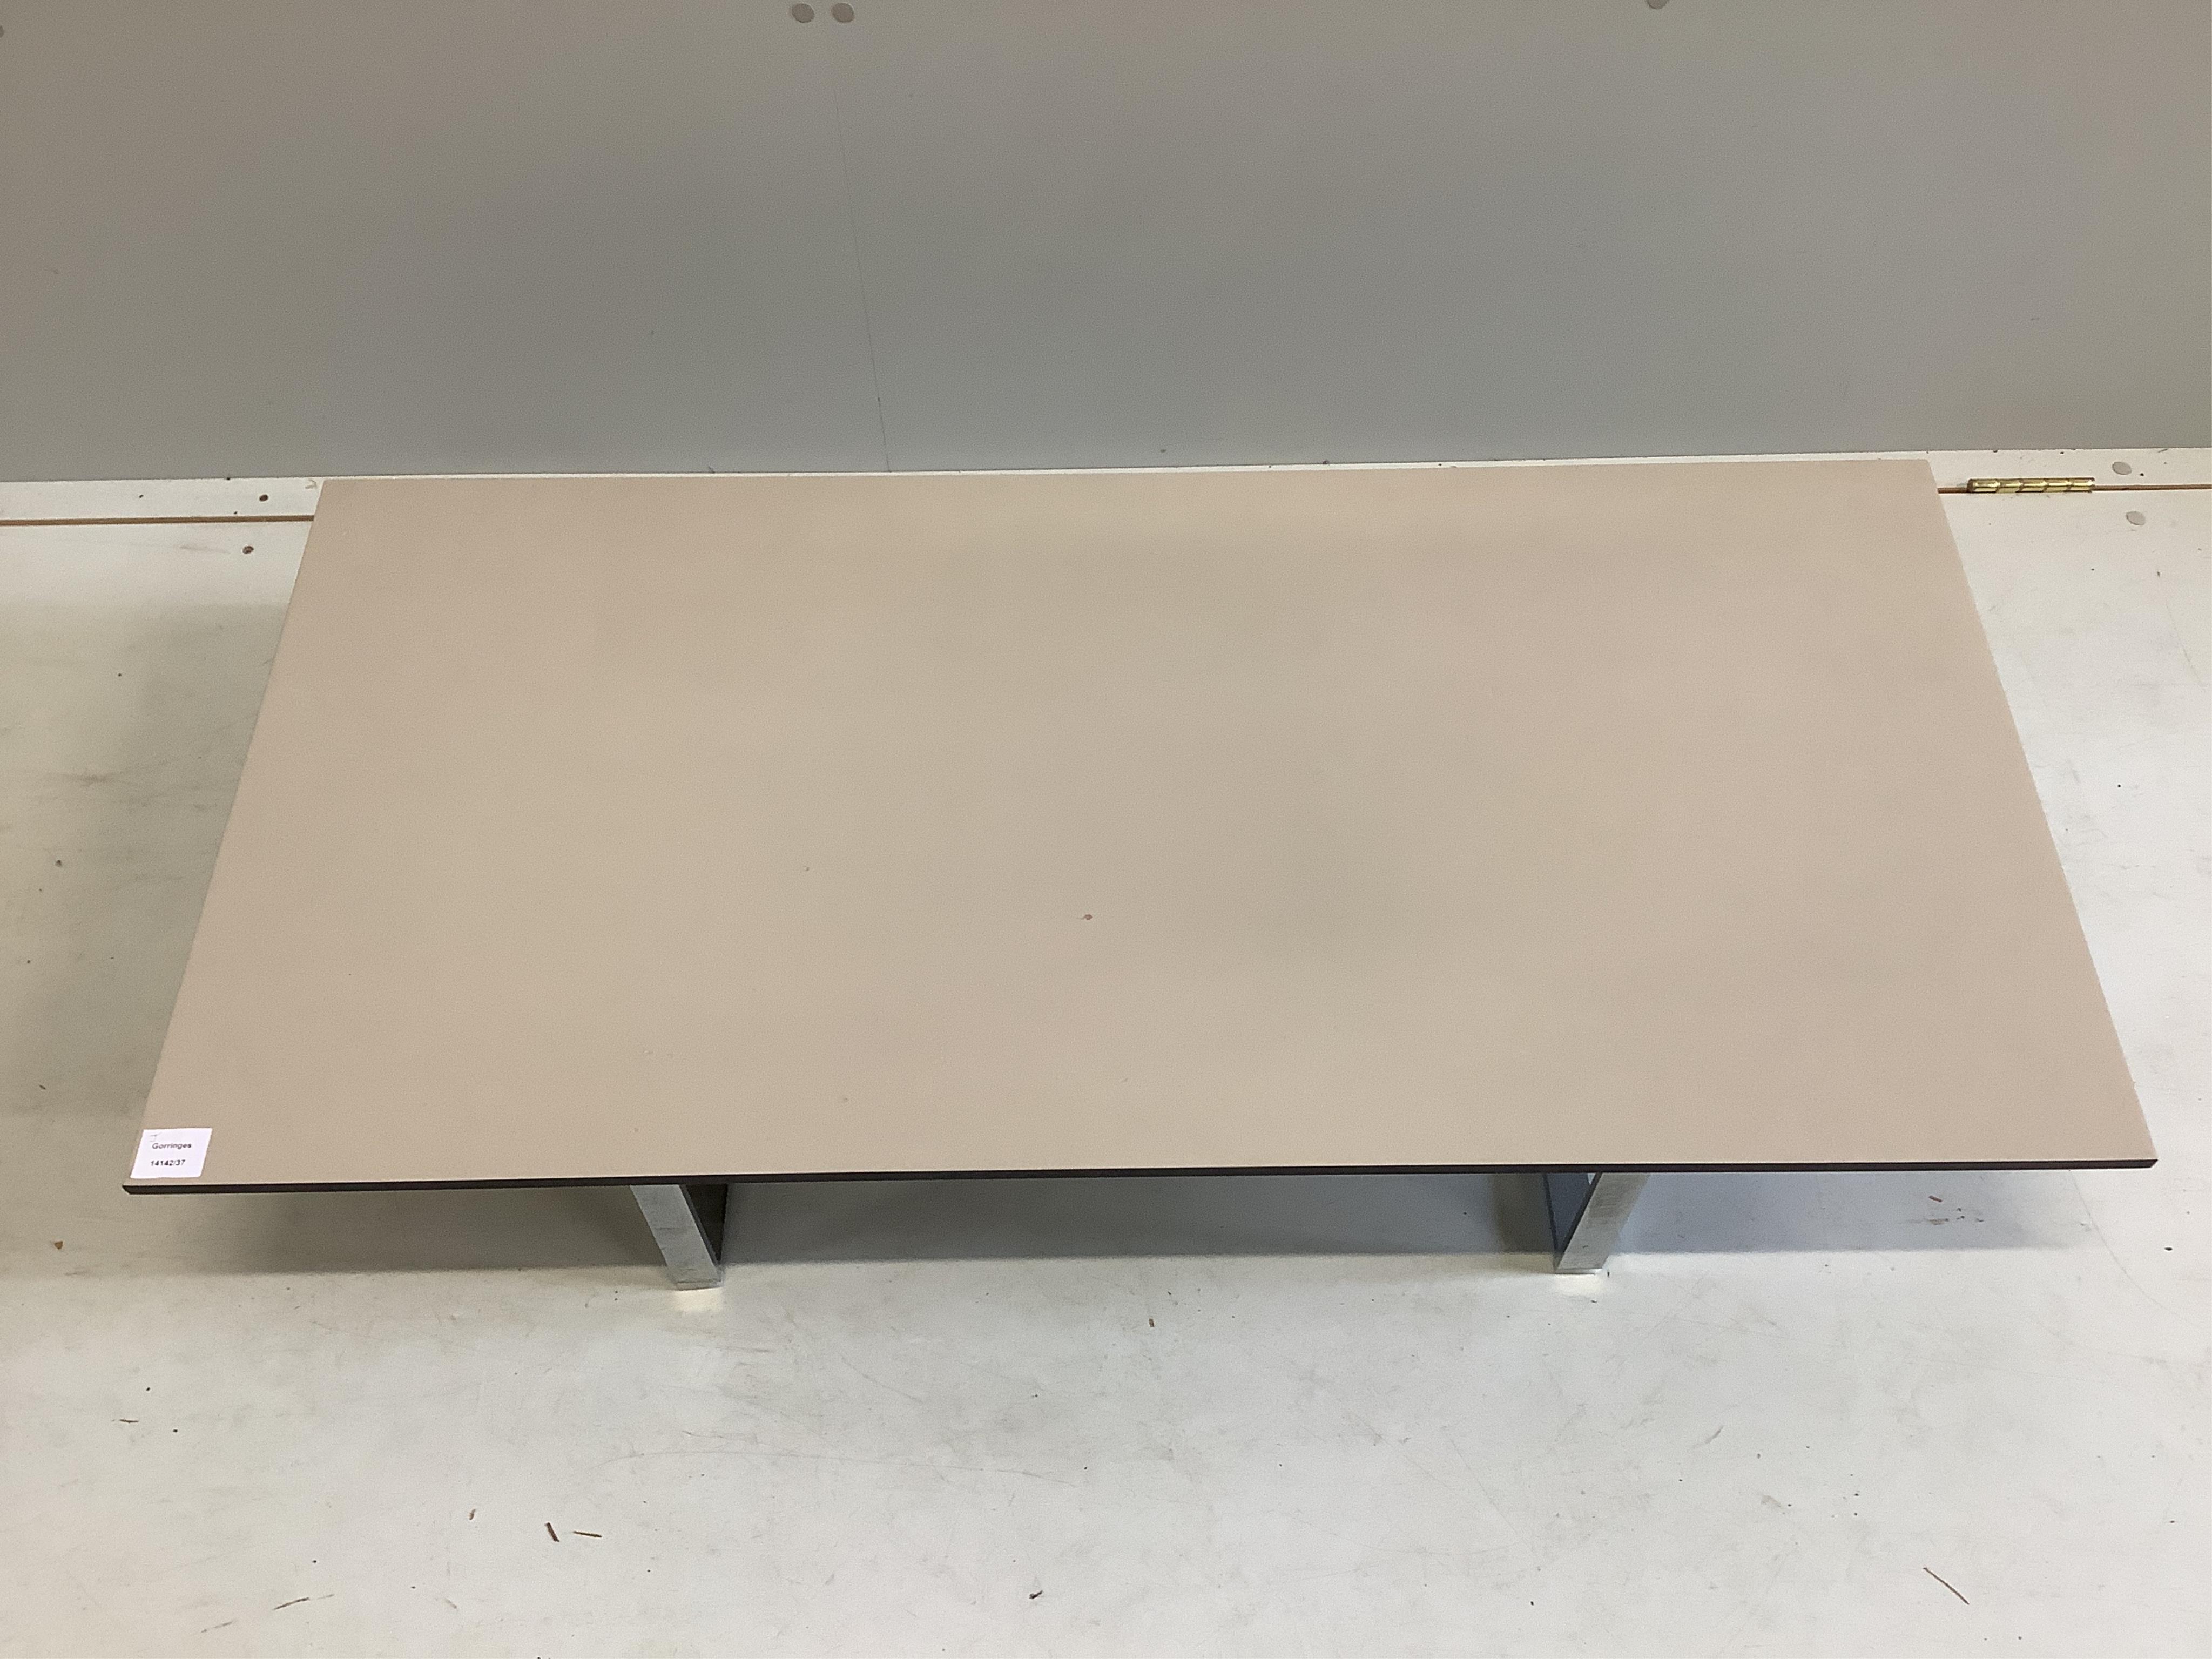 An Italian rectangular coffee table, width 120cm, depth 57cm, height 20cm